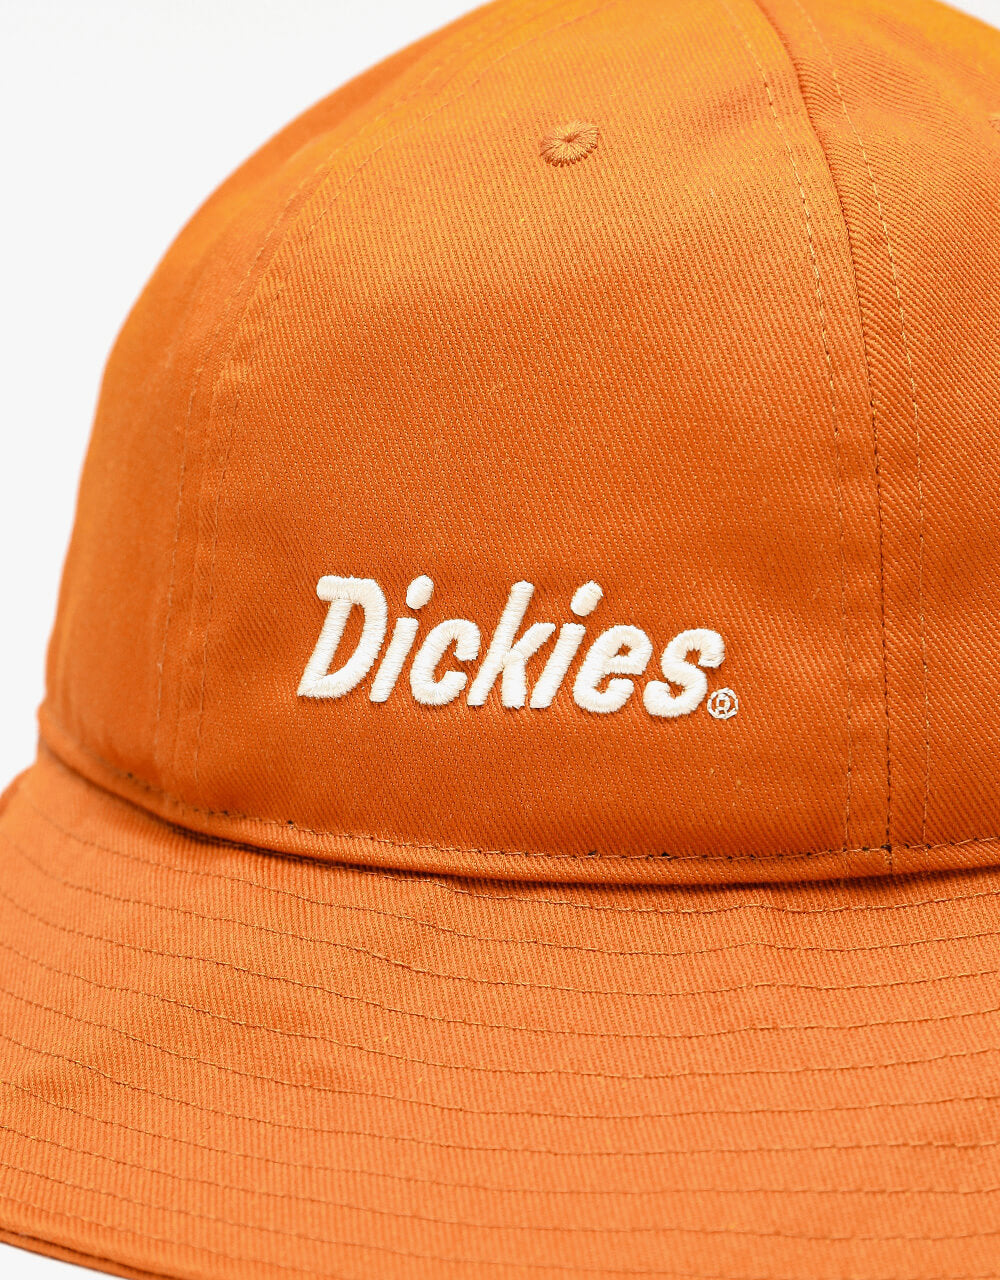 Dickies Bettles Bucket Hat - Pumpkin Spice